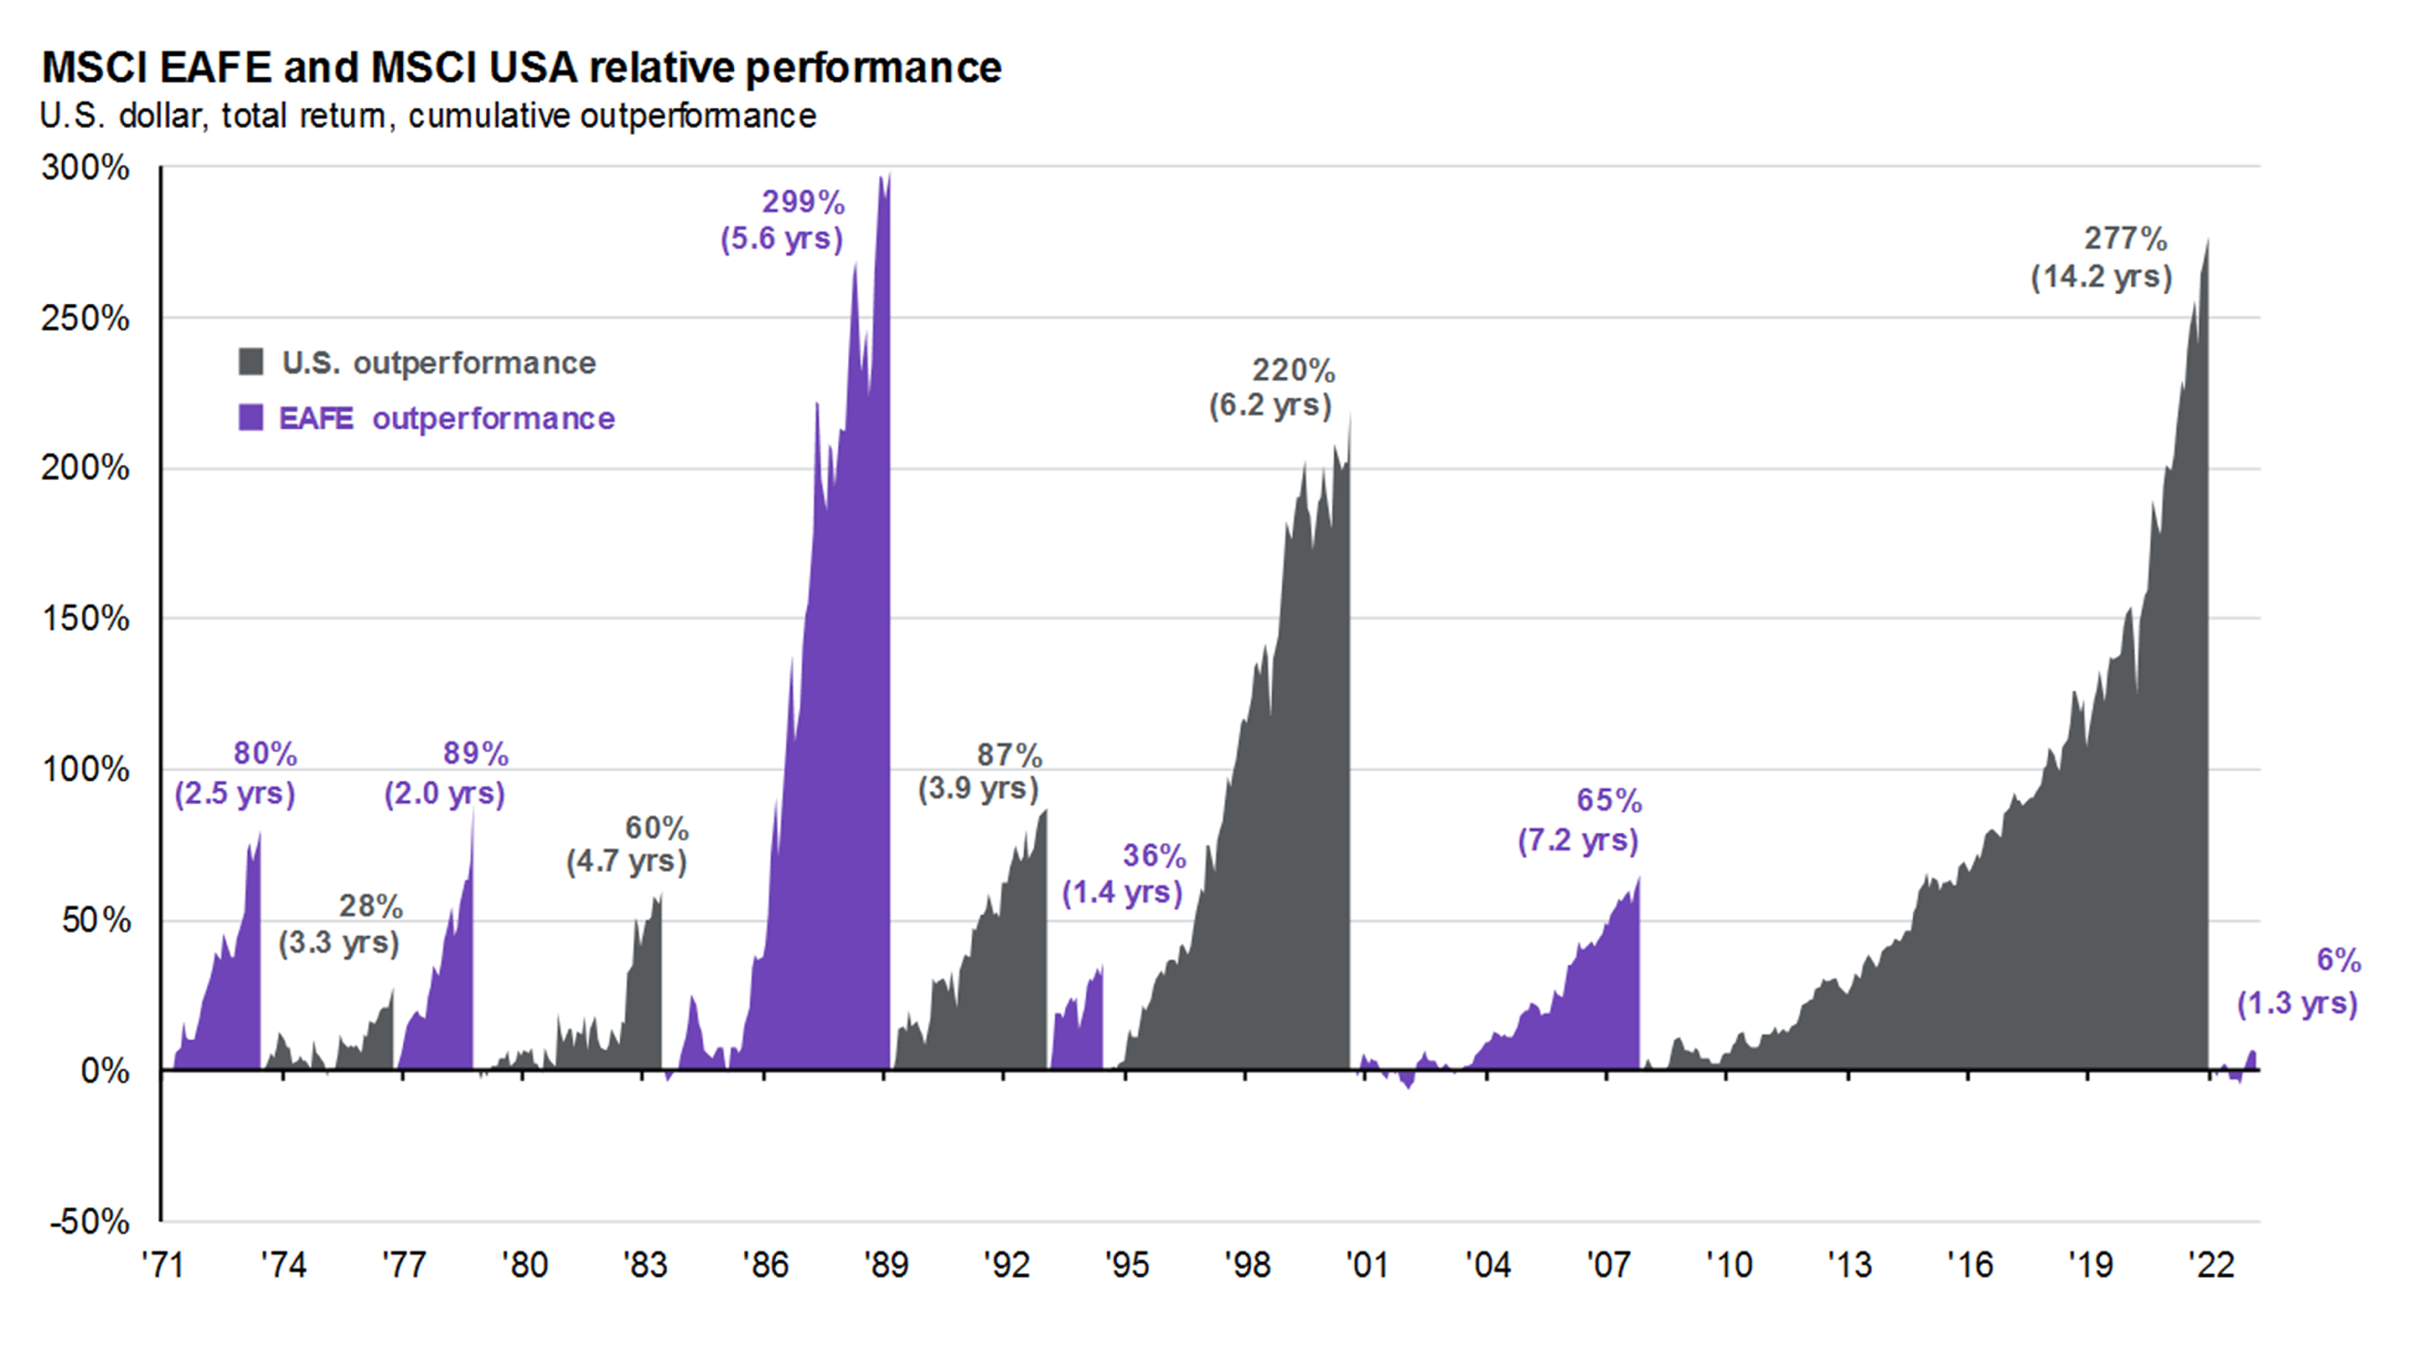 MSCI EAFE and MSCI USA relative performance